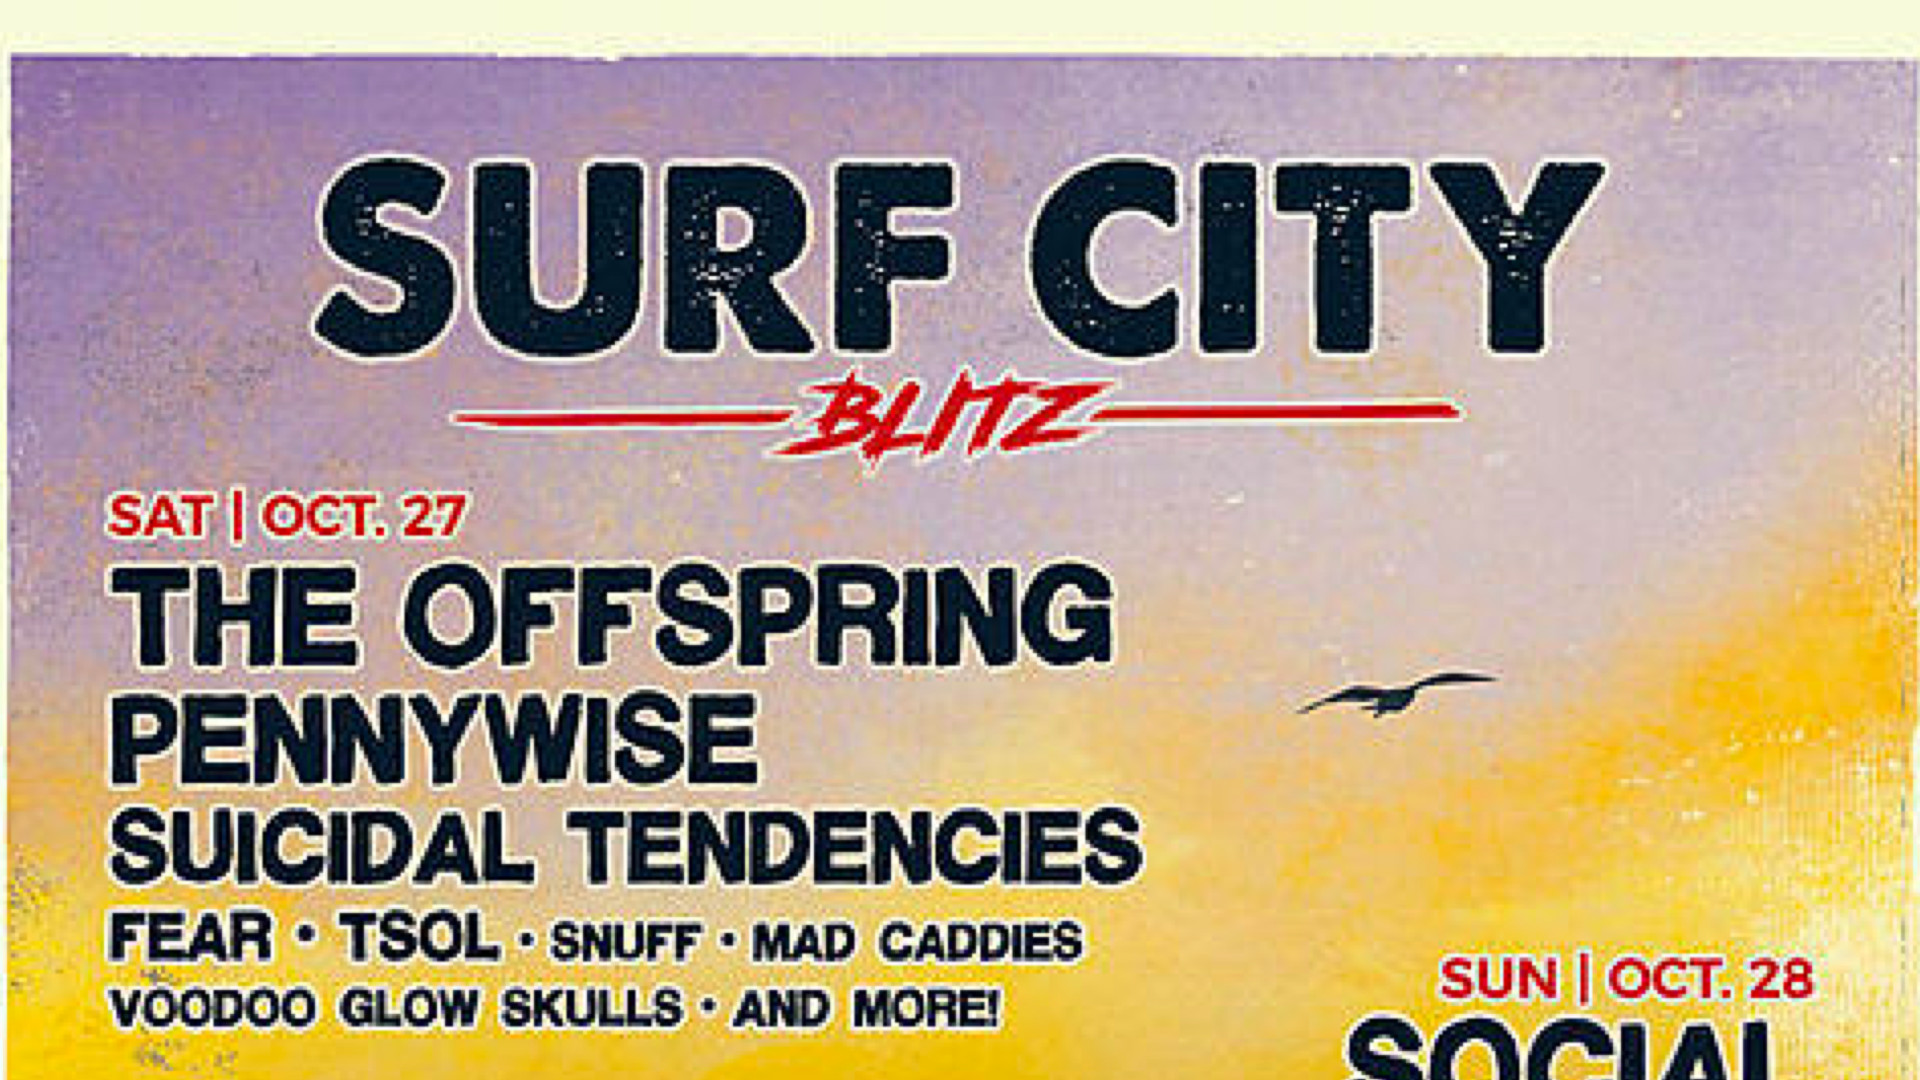 1920x1080 The Offspring, Social Distortion, Bad Religion, Rancid, Suicidal  Tendencies, Etc. Playing 'Surf City Blitz' Festival